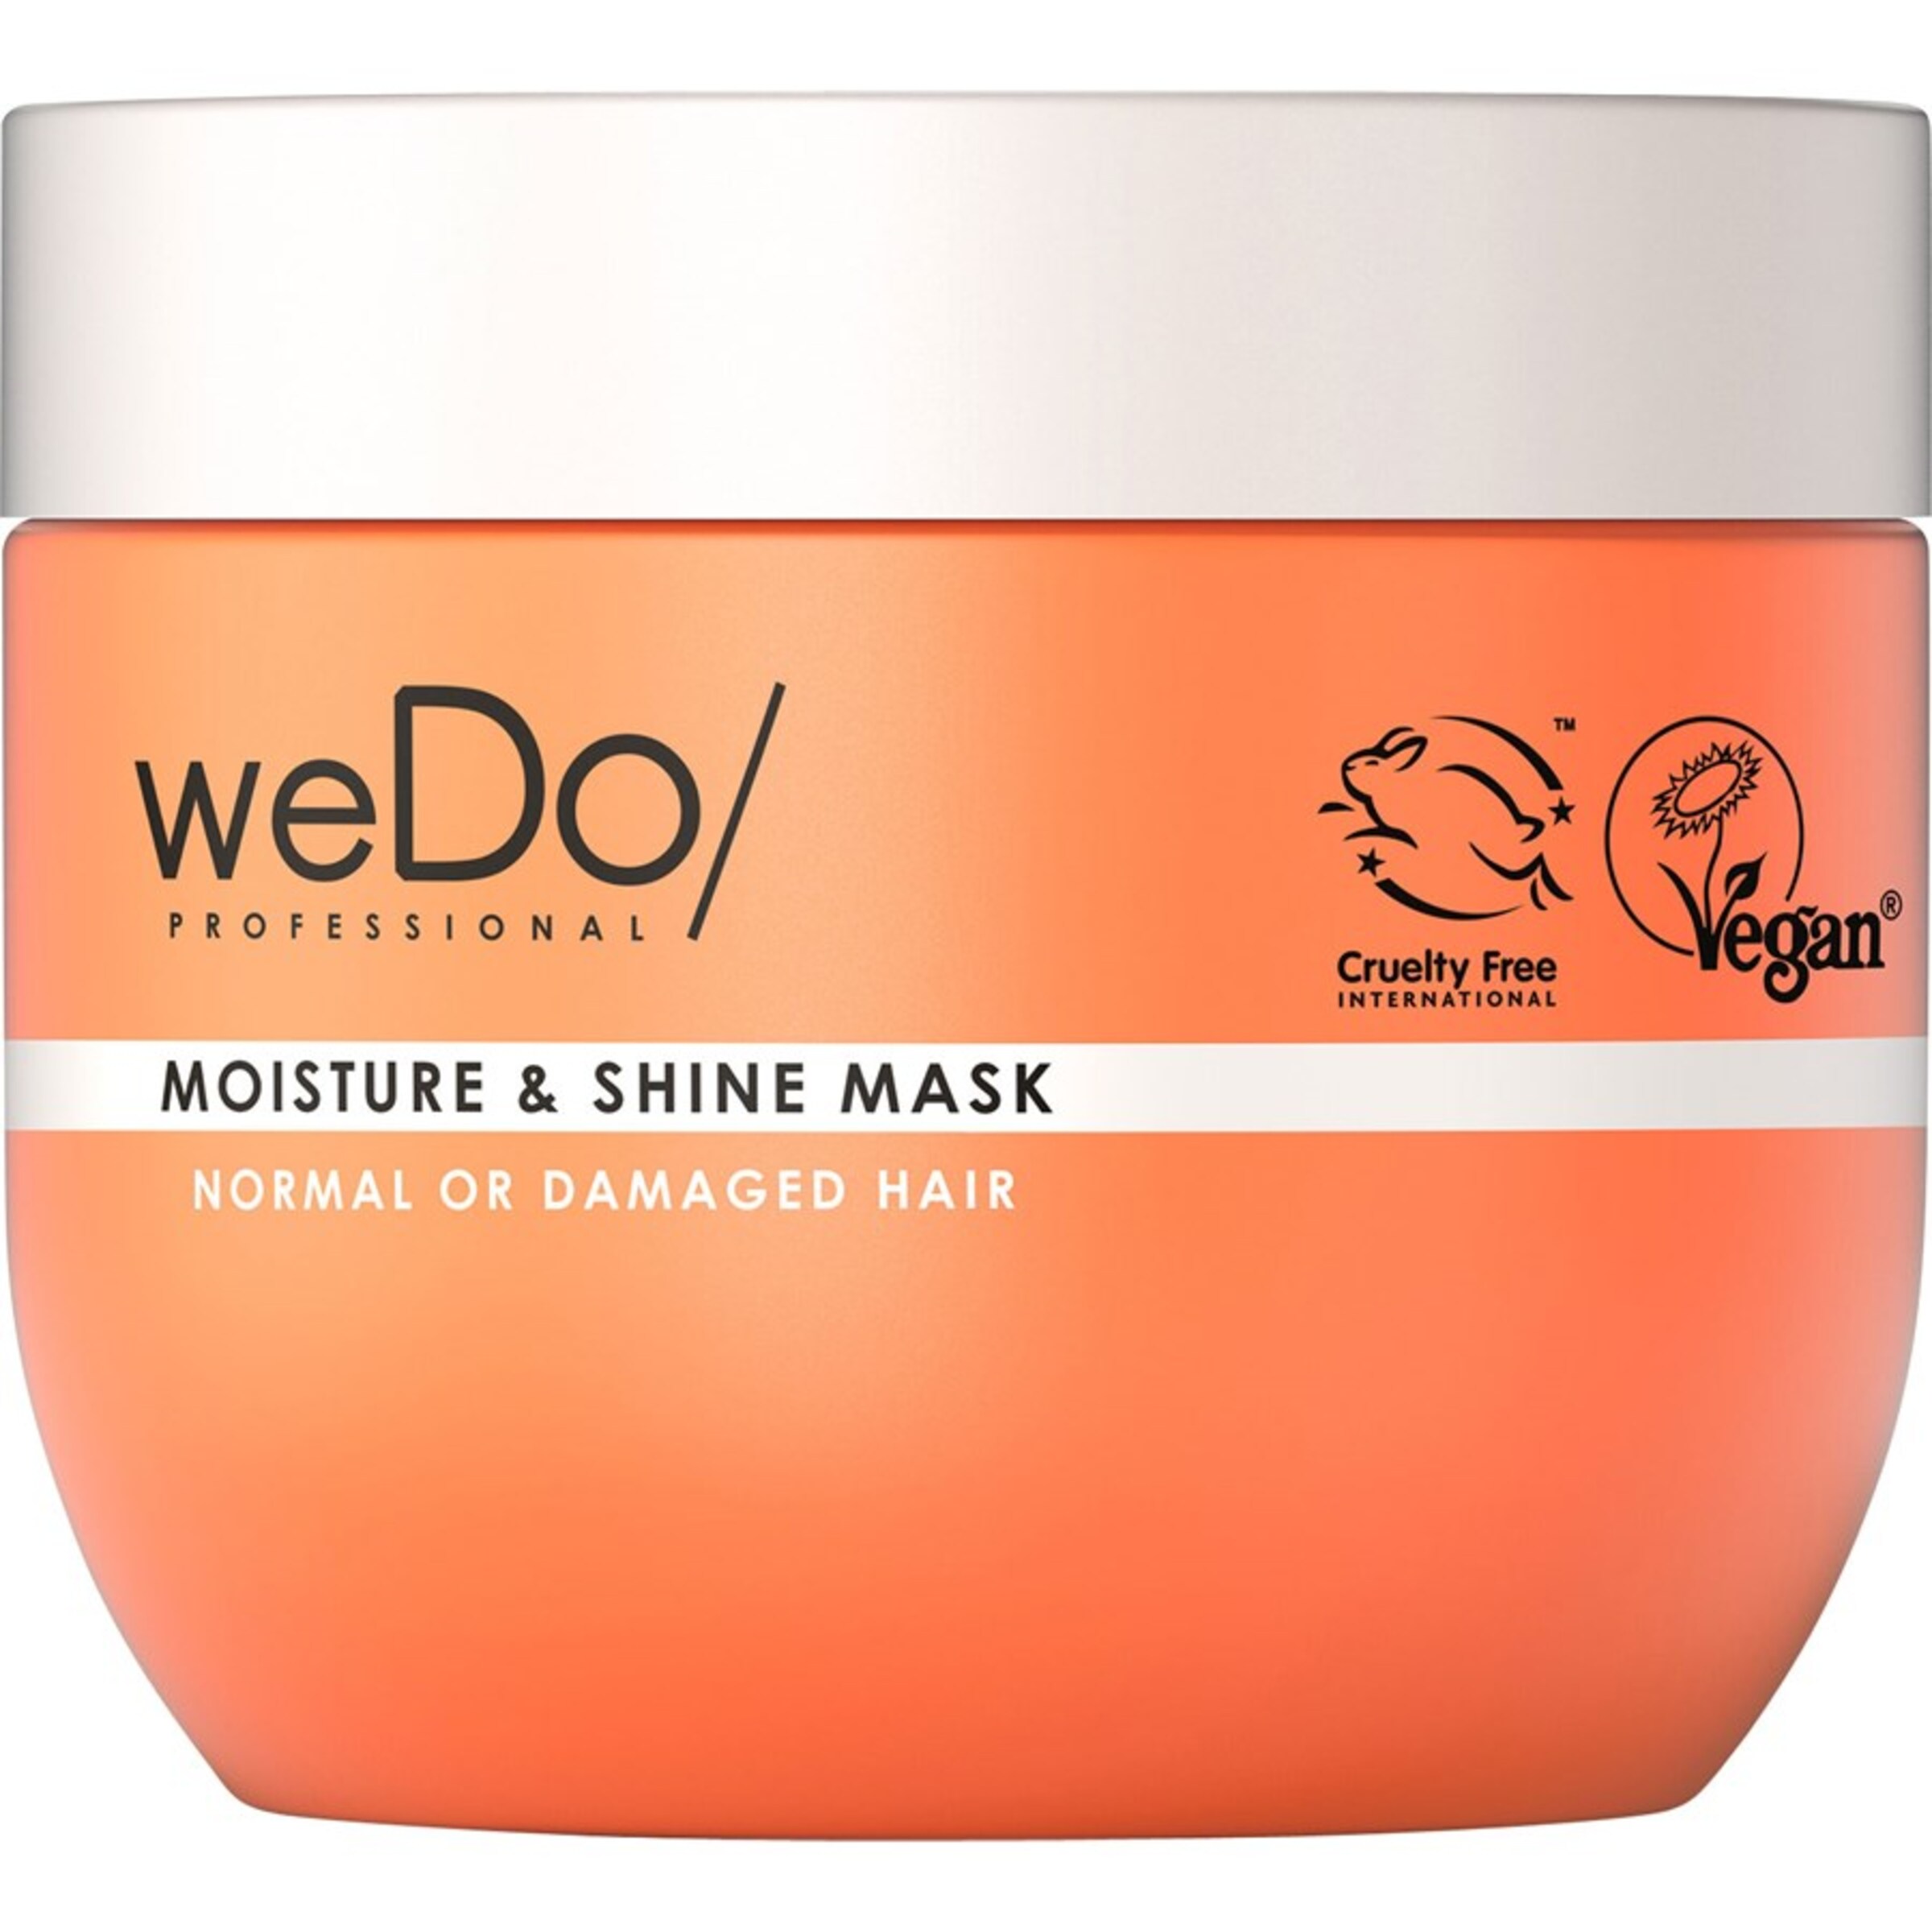 weDo/ Professional Maske Moisture & Shine in 